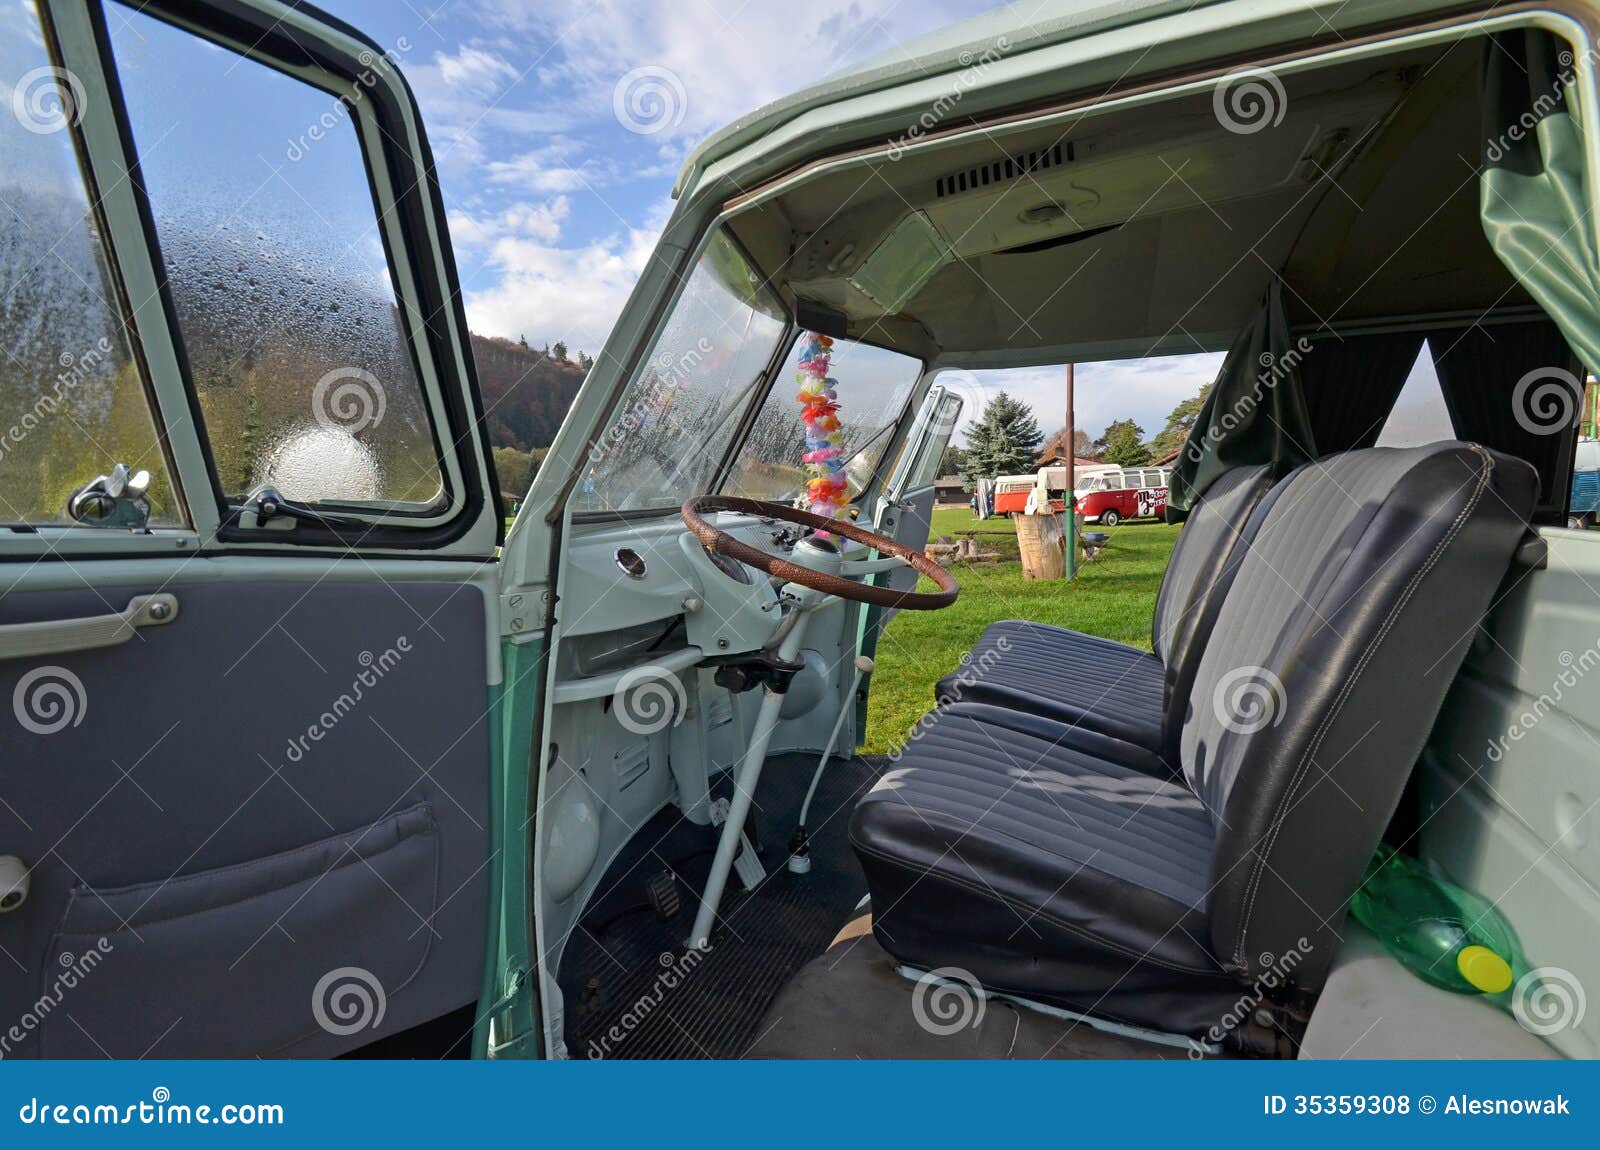 Vw Transporter Classic Camping Van Stock Photo Image Of